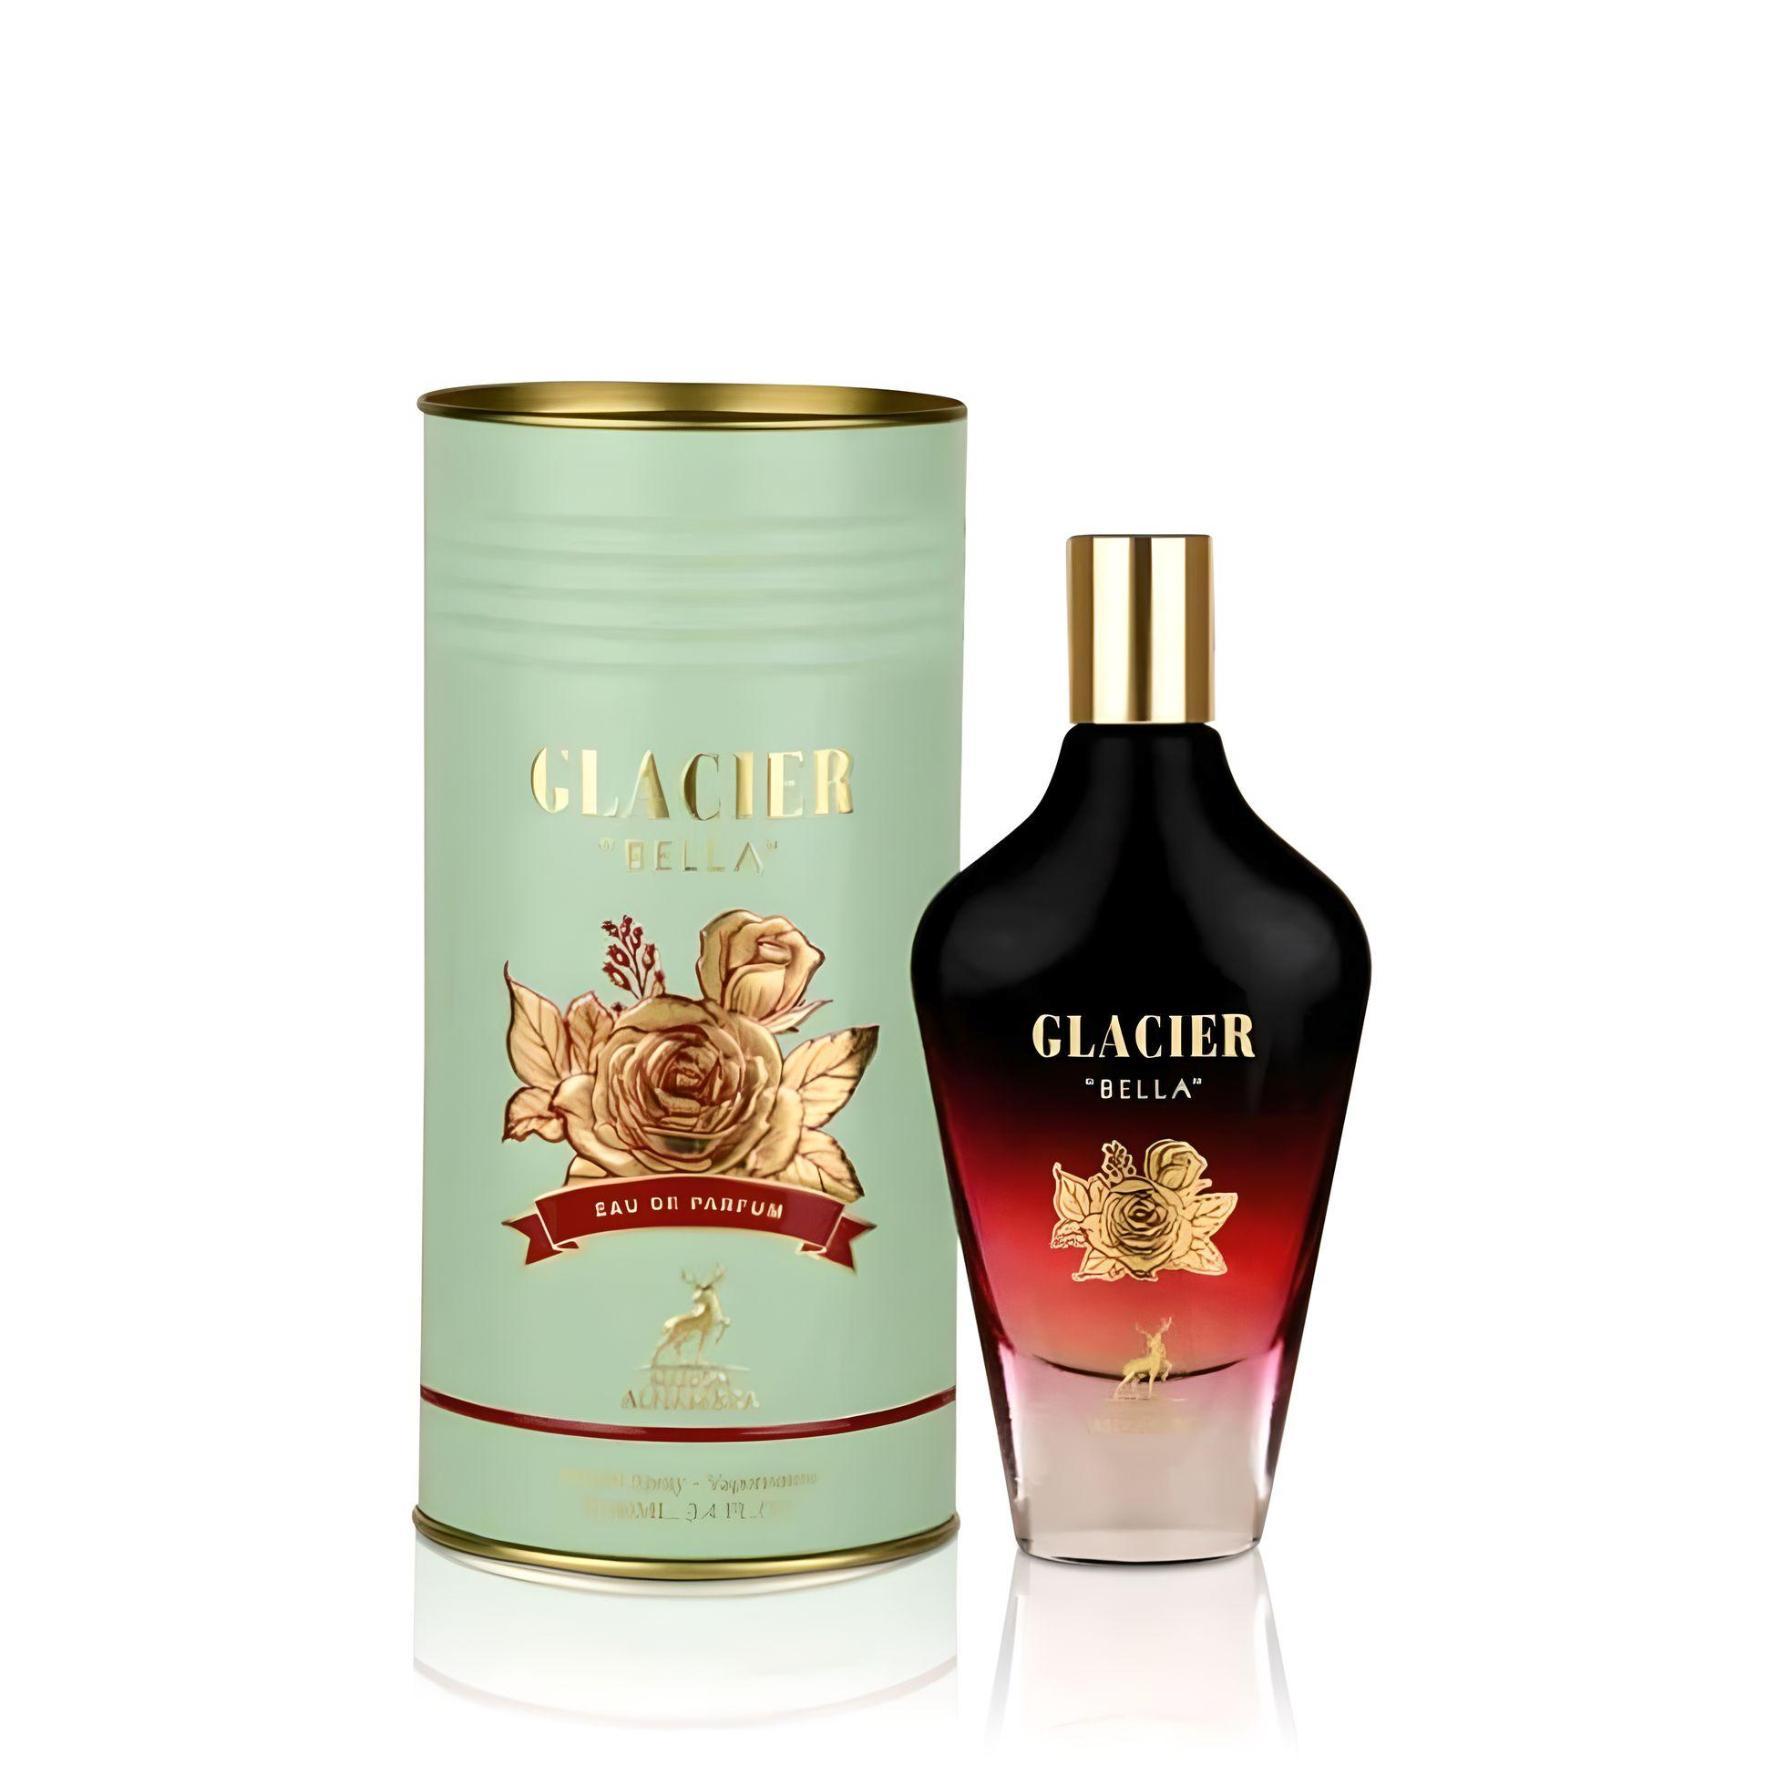 Glacier Bella Perfume / Eau De Parfum By Maison Alhambra / Lattafa (Inspired By La Belle - Jpg)